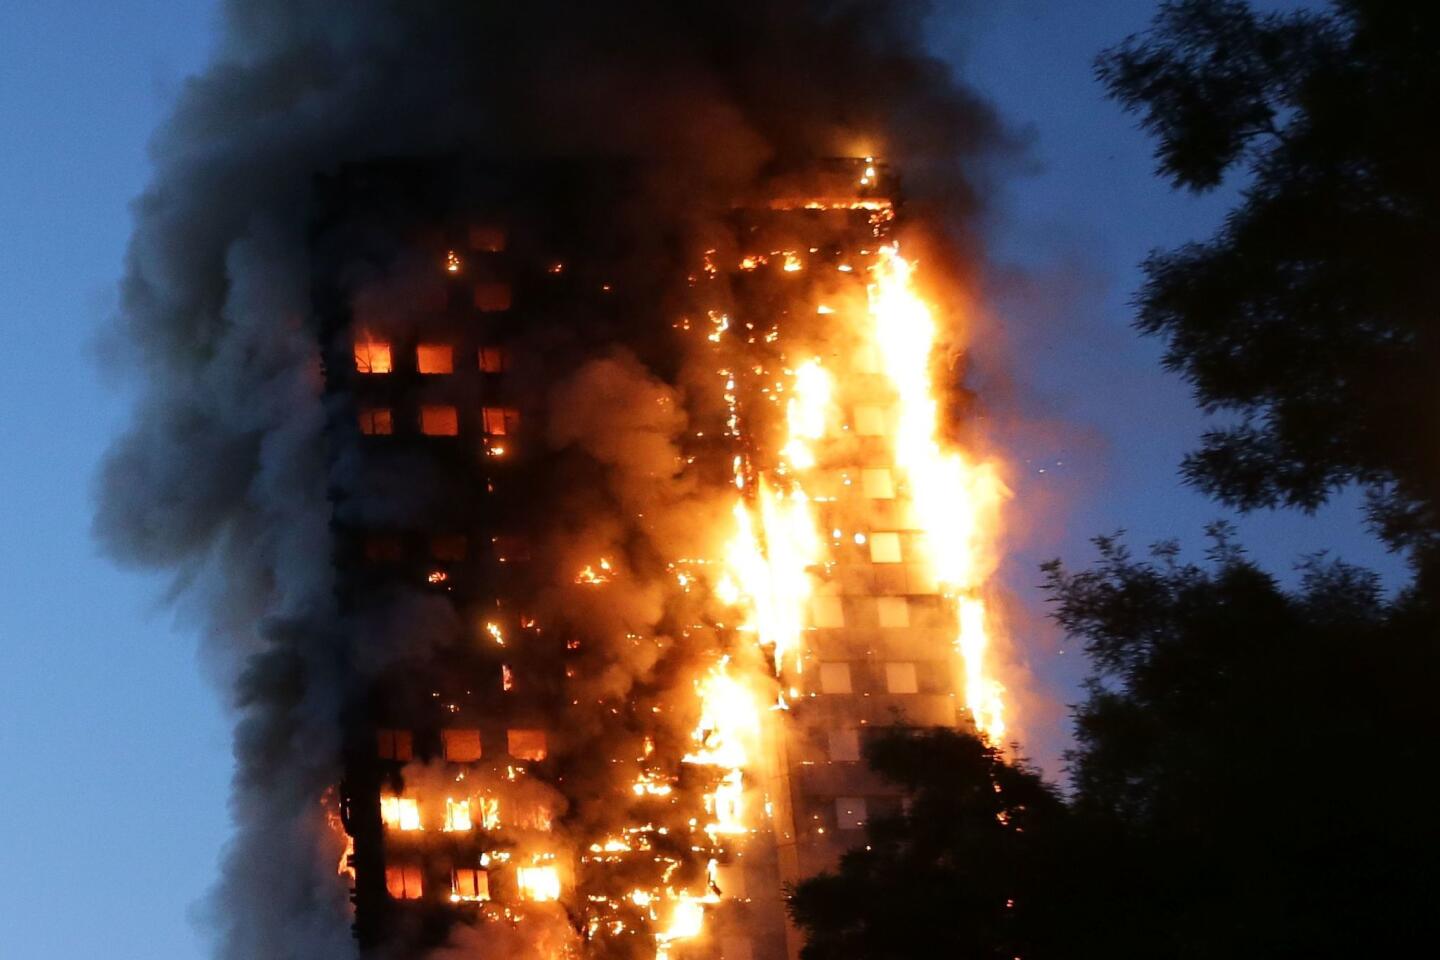 London high-rise fire